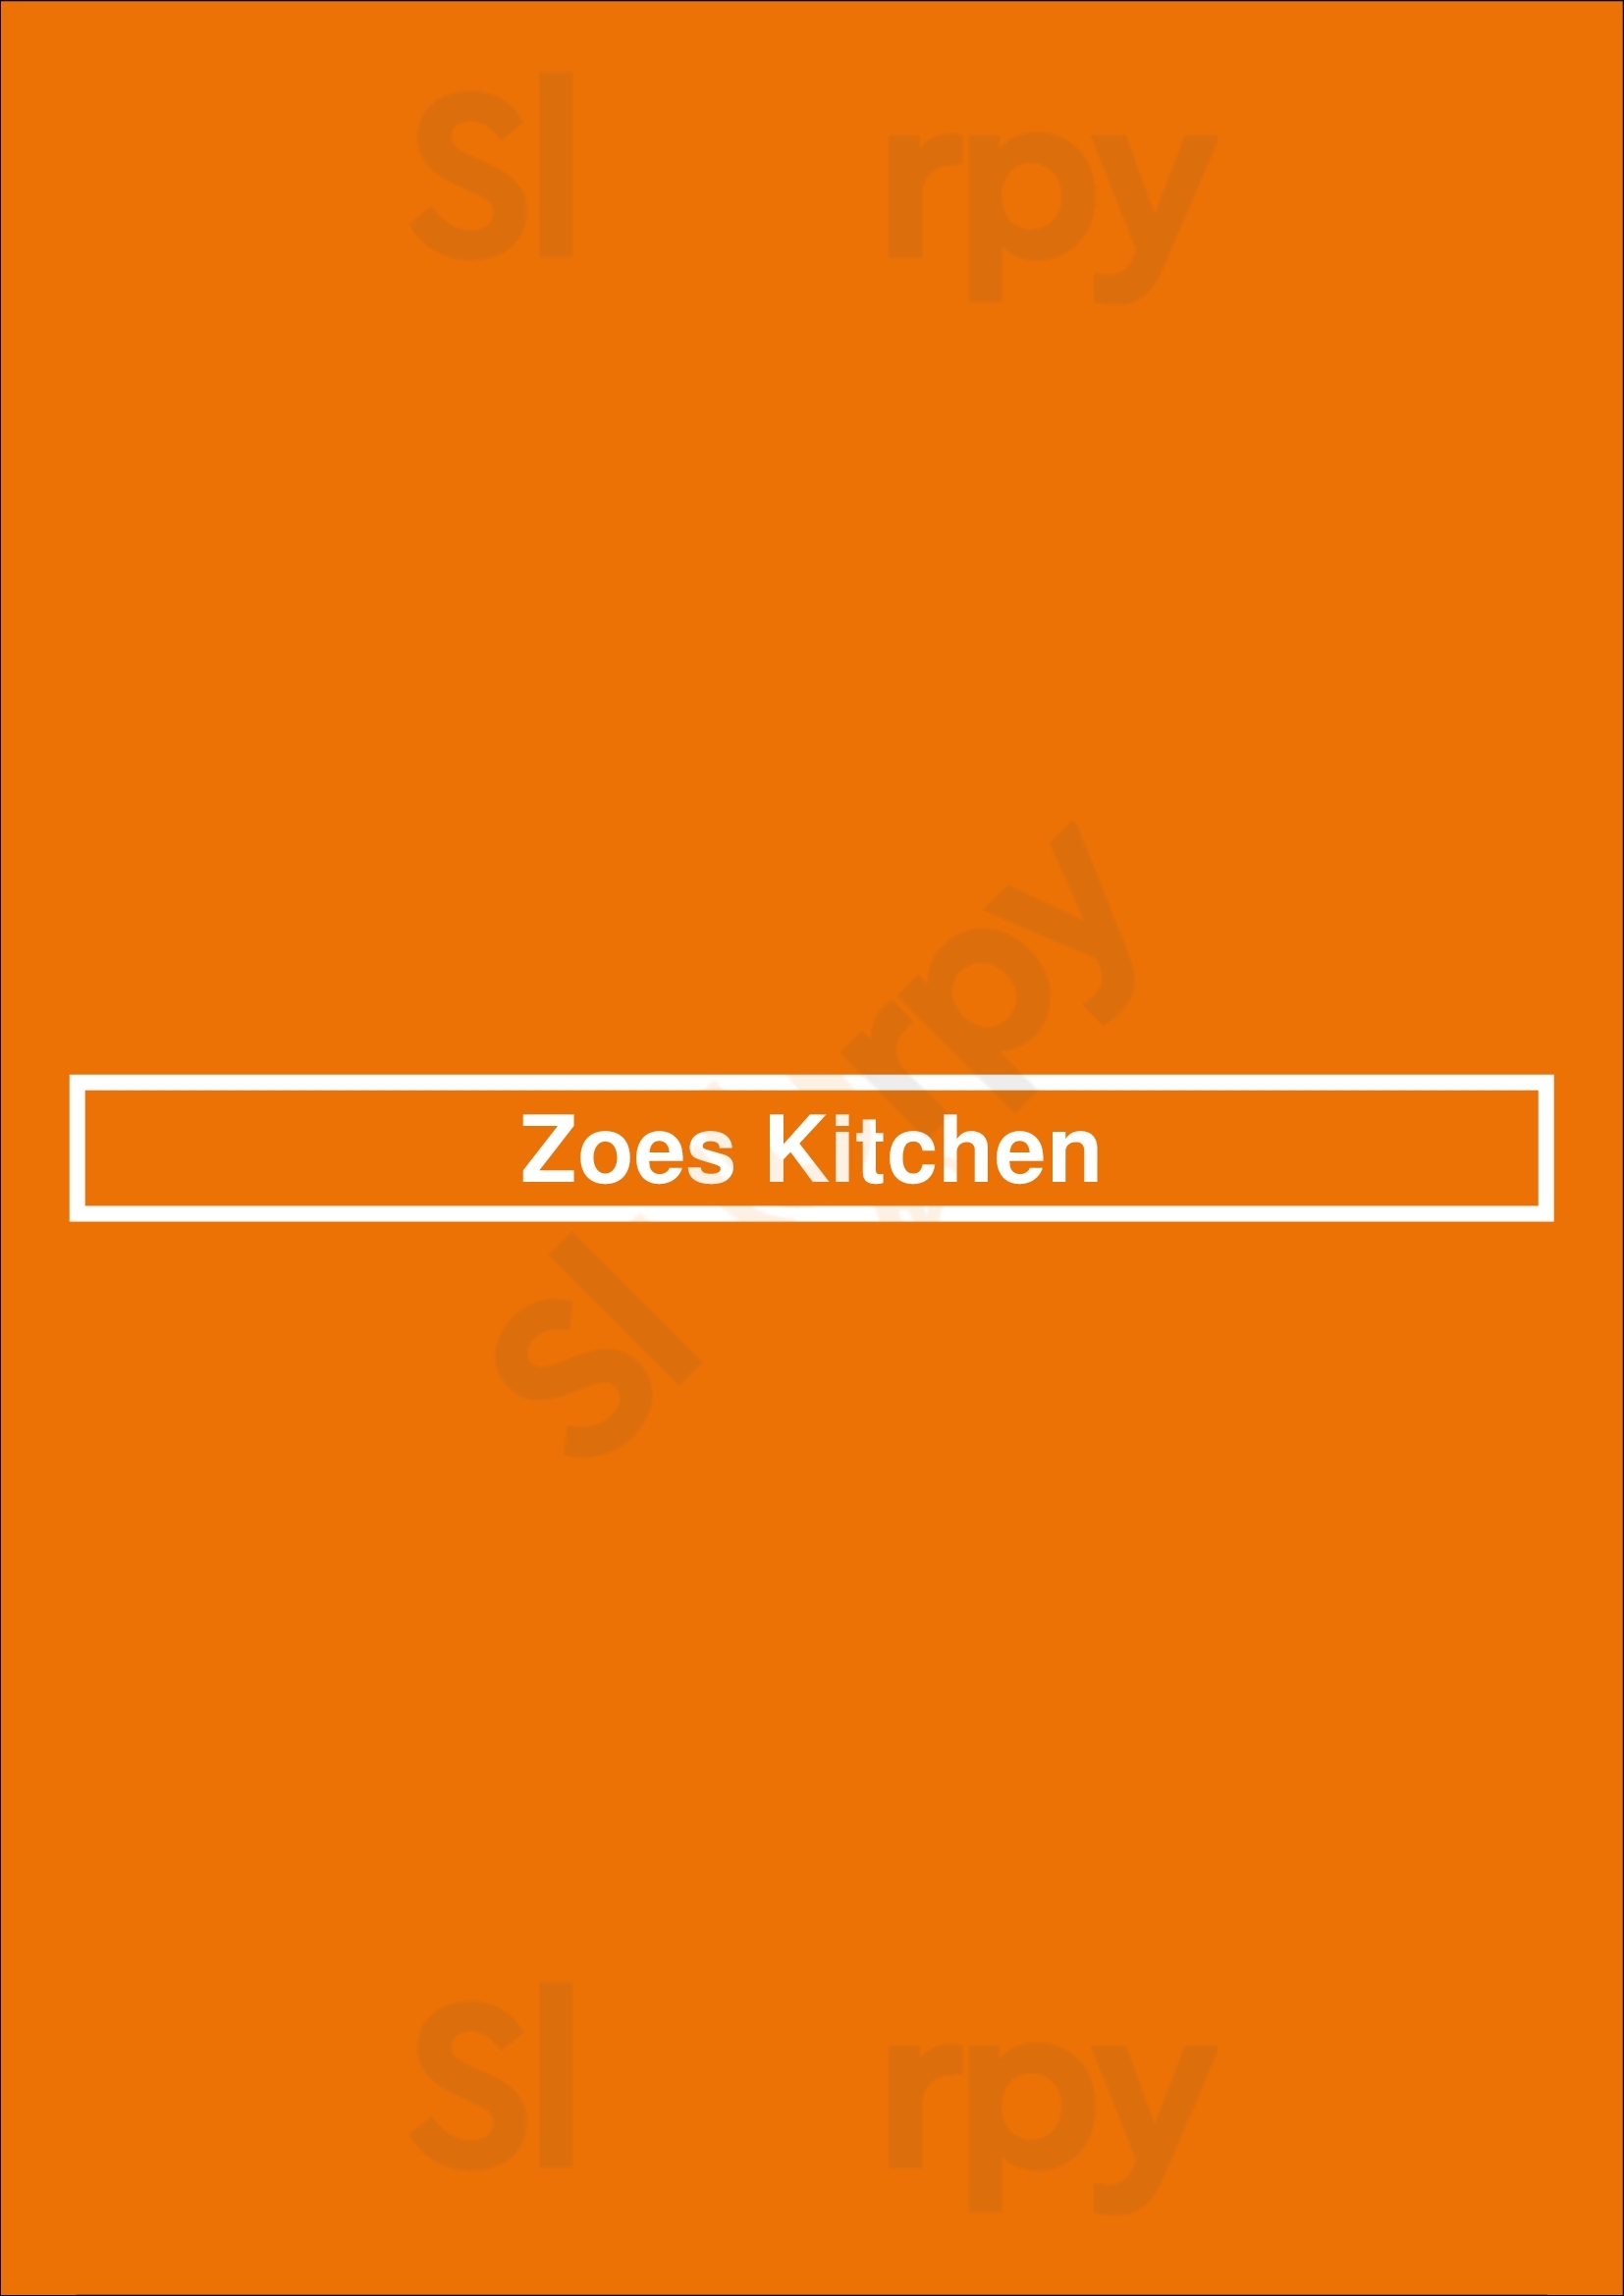 Zoes Kitchen Kansas City Menu - 1